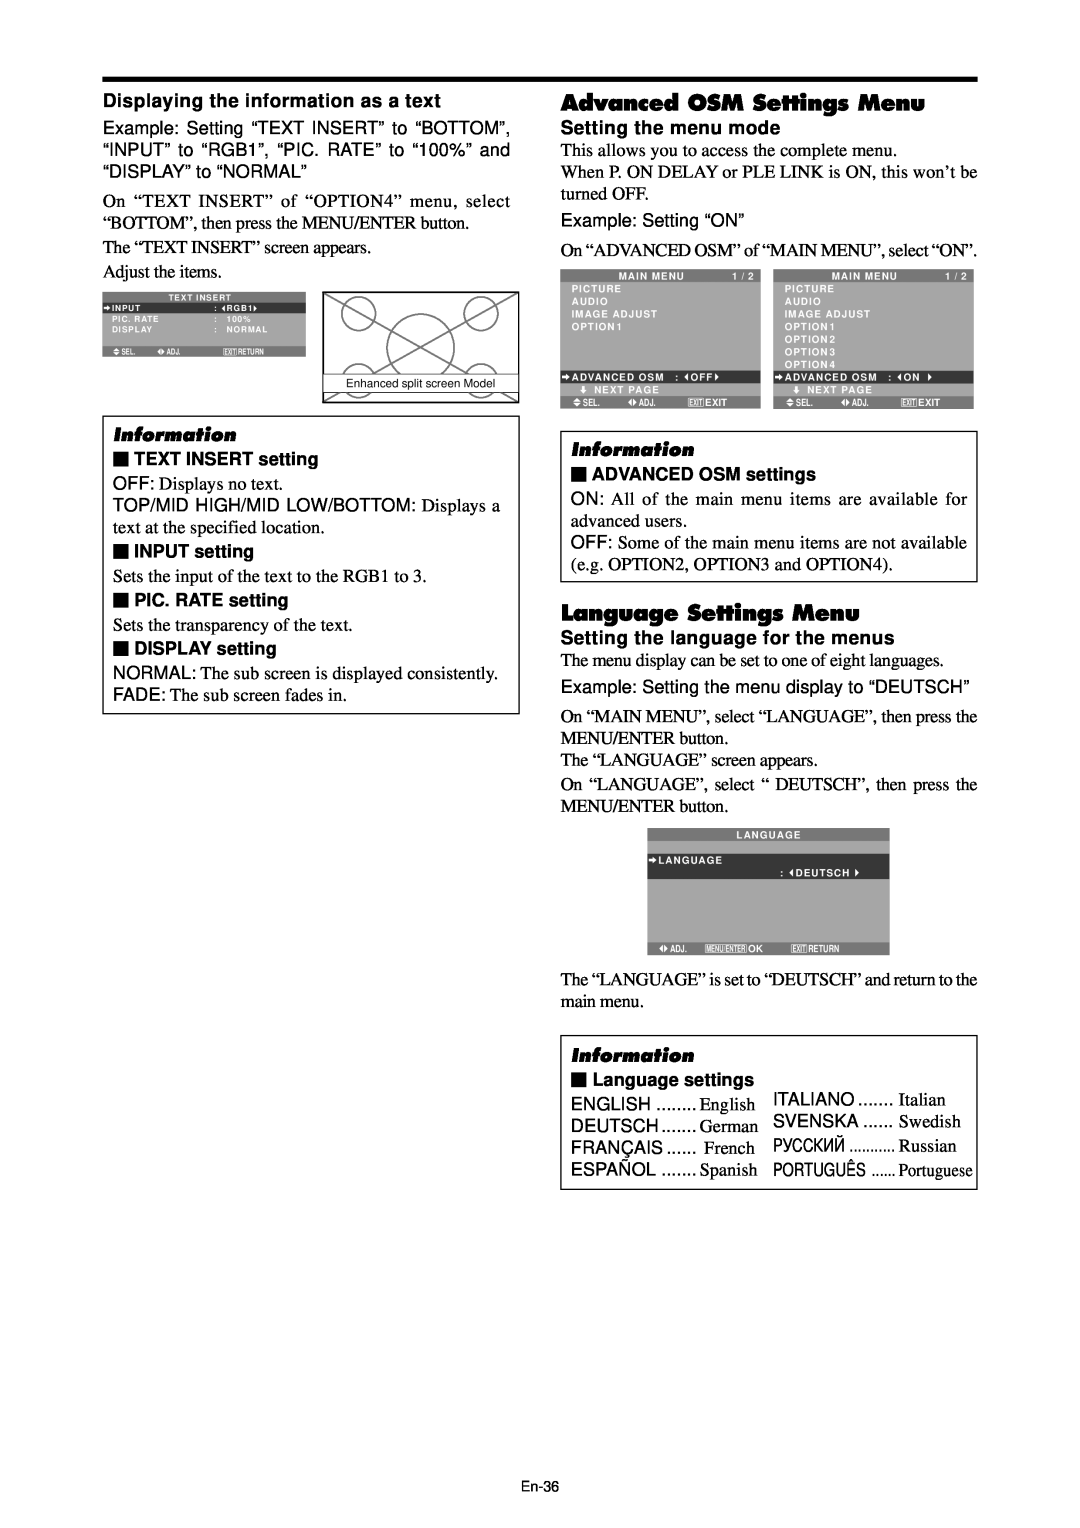 NEC PX-61XM4A manual Advanced OSM Settings Menu, Language Settings Menu, Displaying the information as a text, Information 